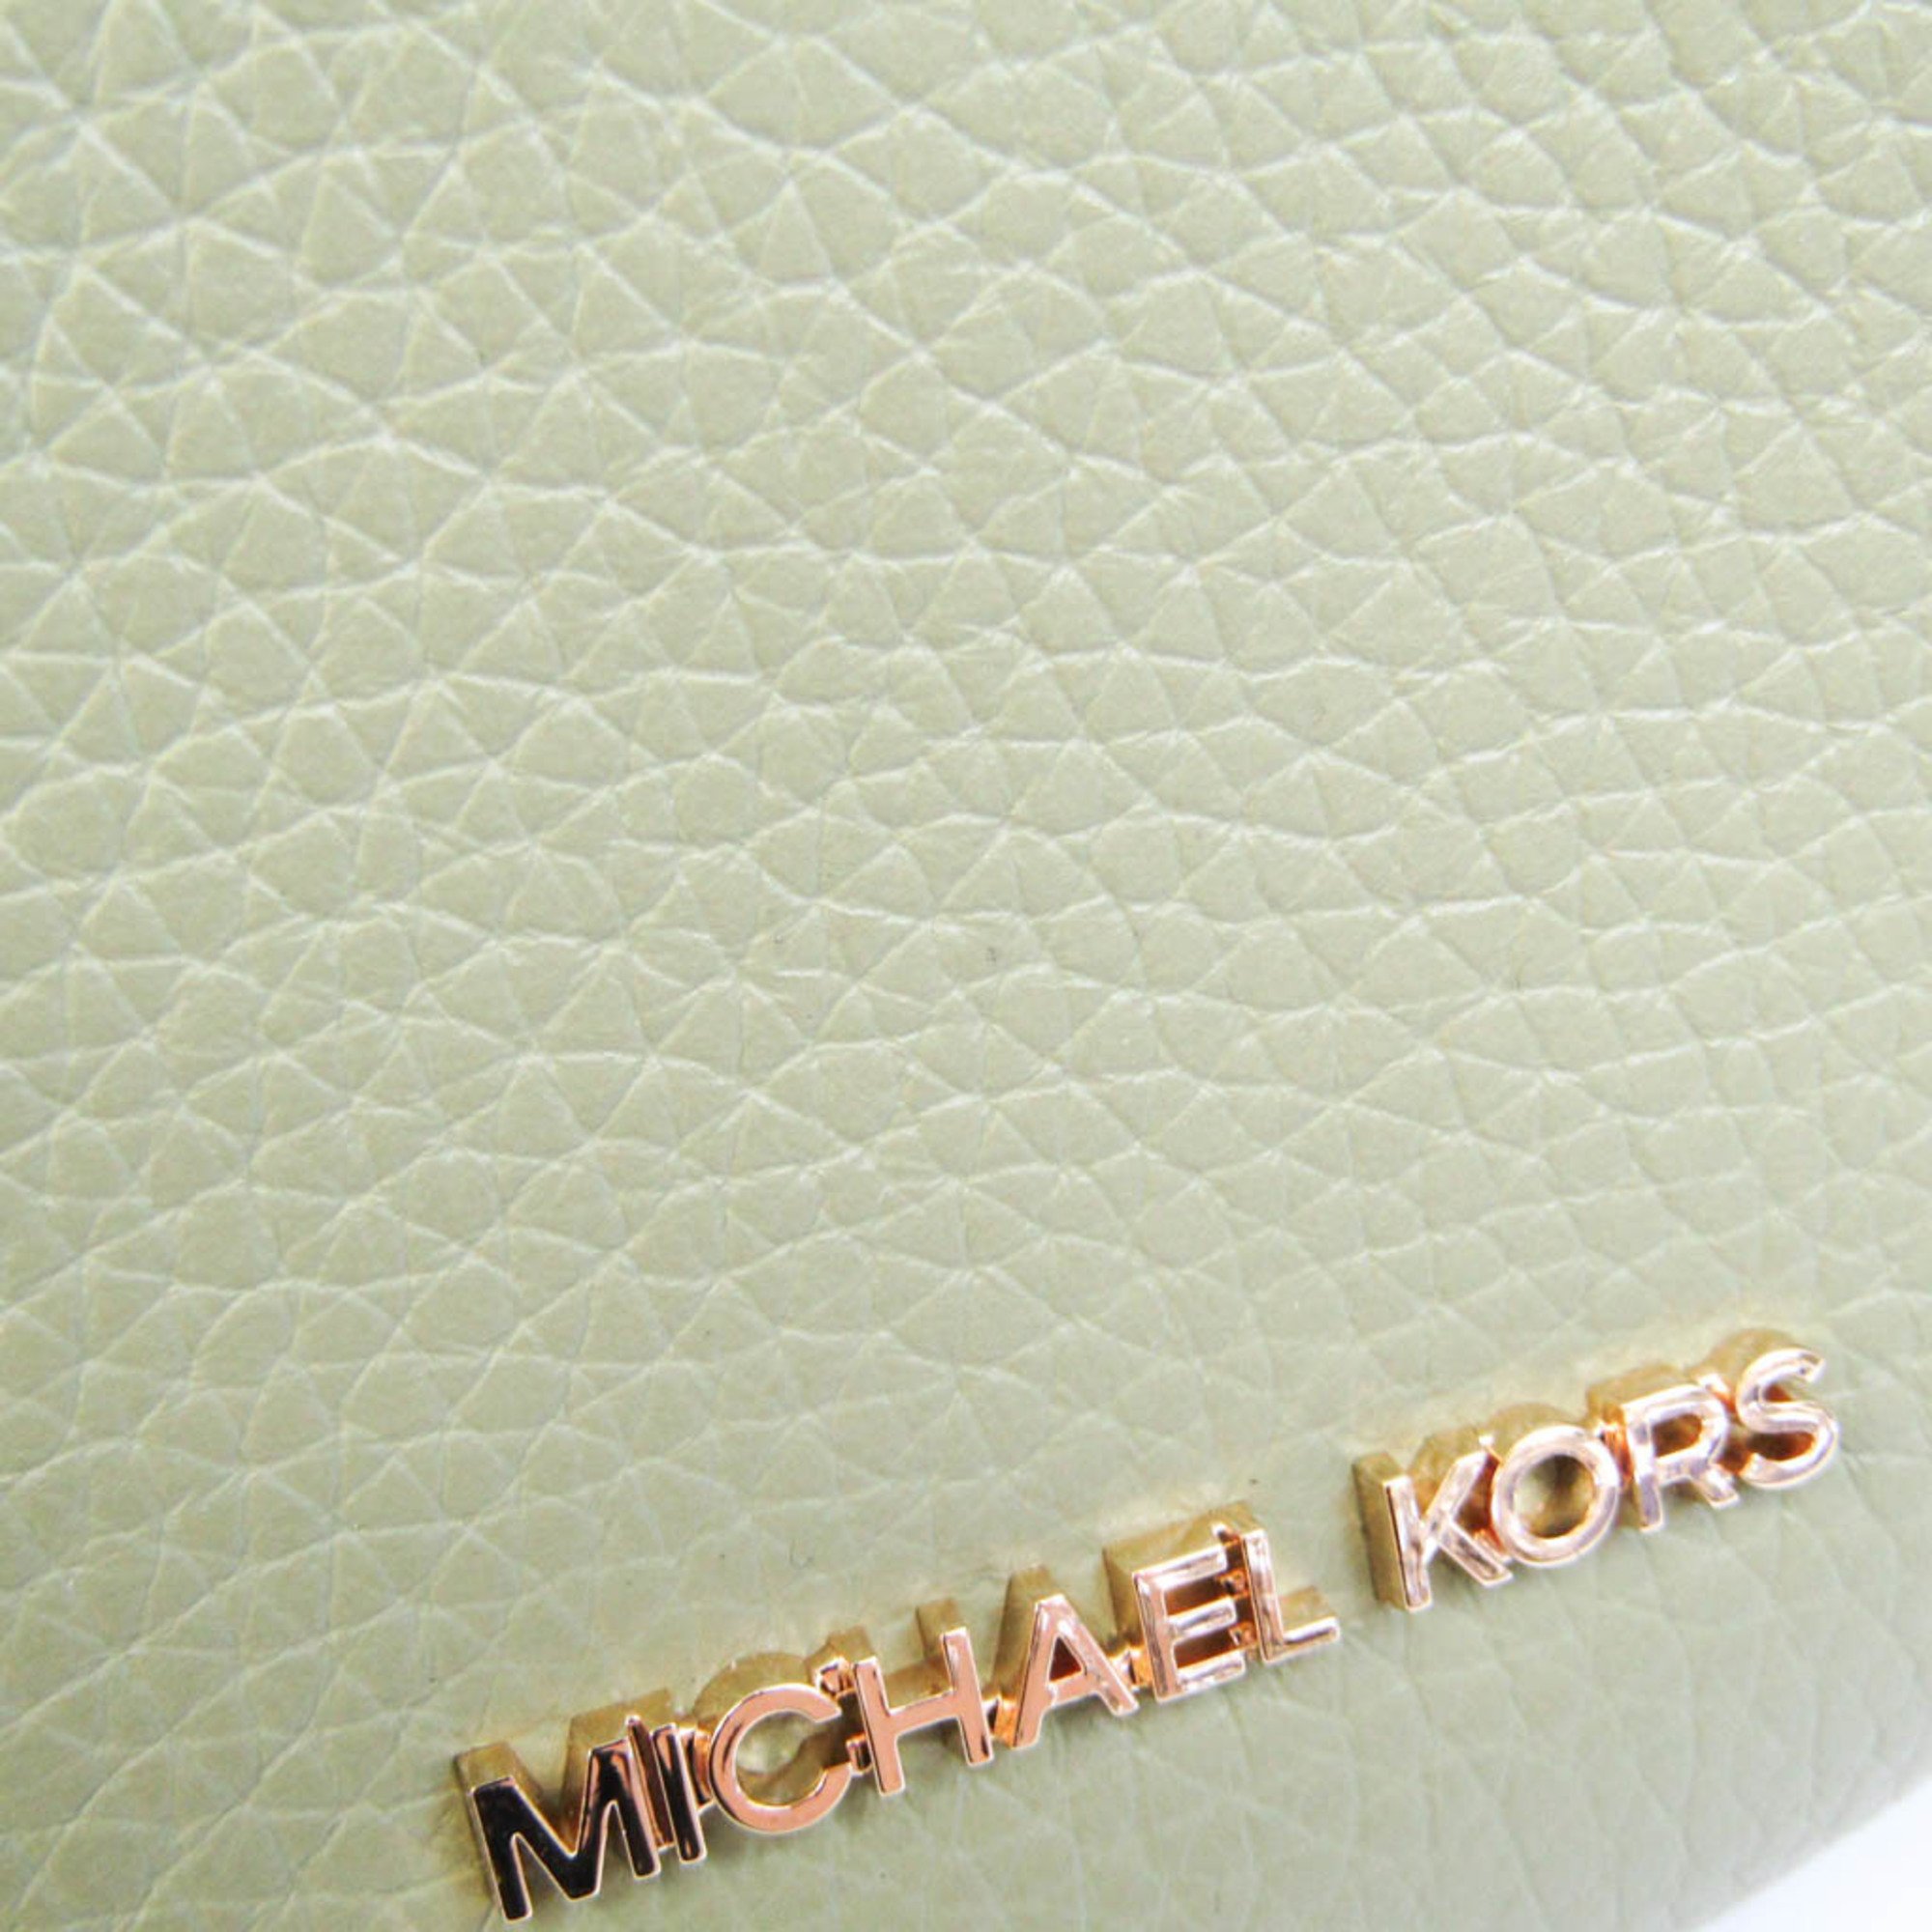 Michael Kors DOVER 35R3G4DC5L Women's Leather Shoulder Bag Light Green